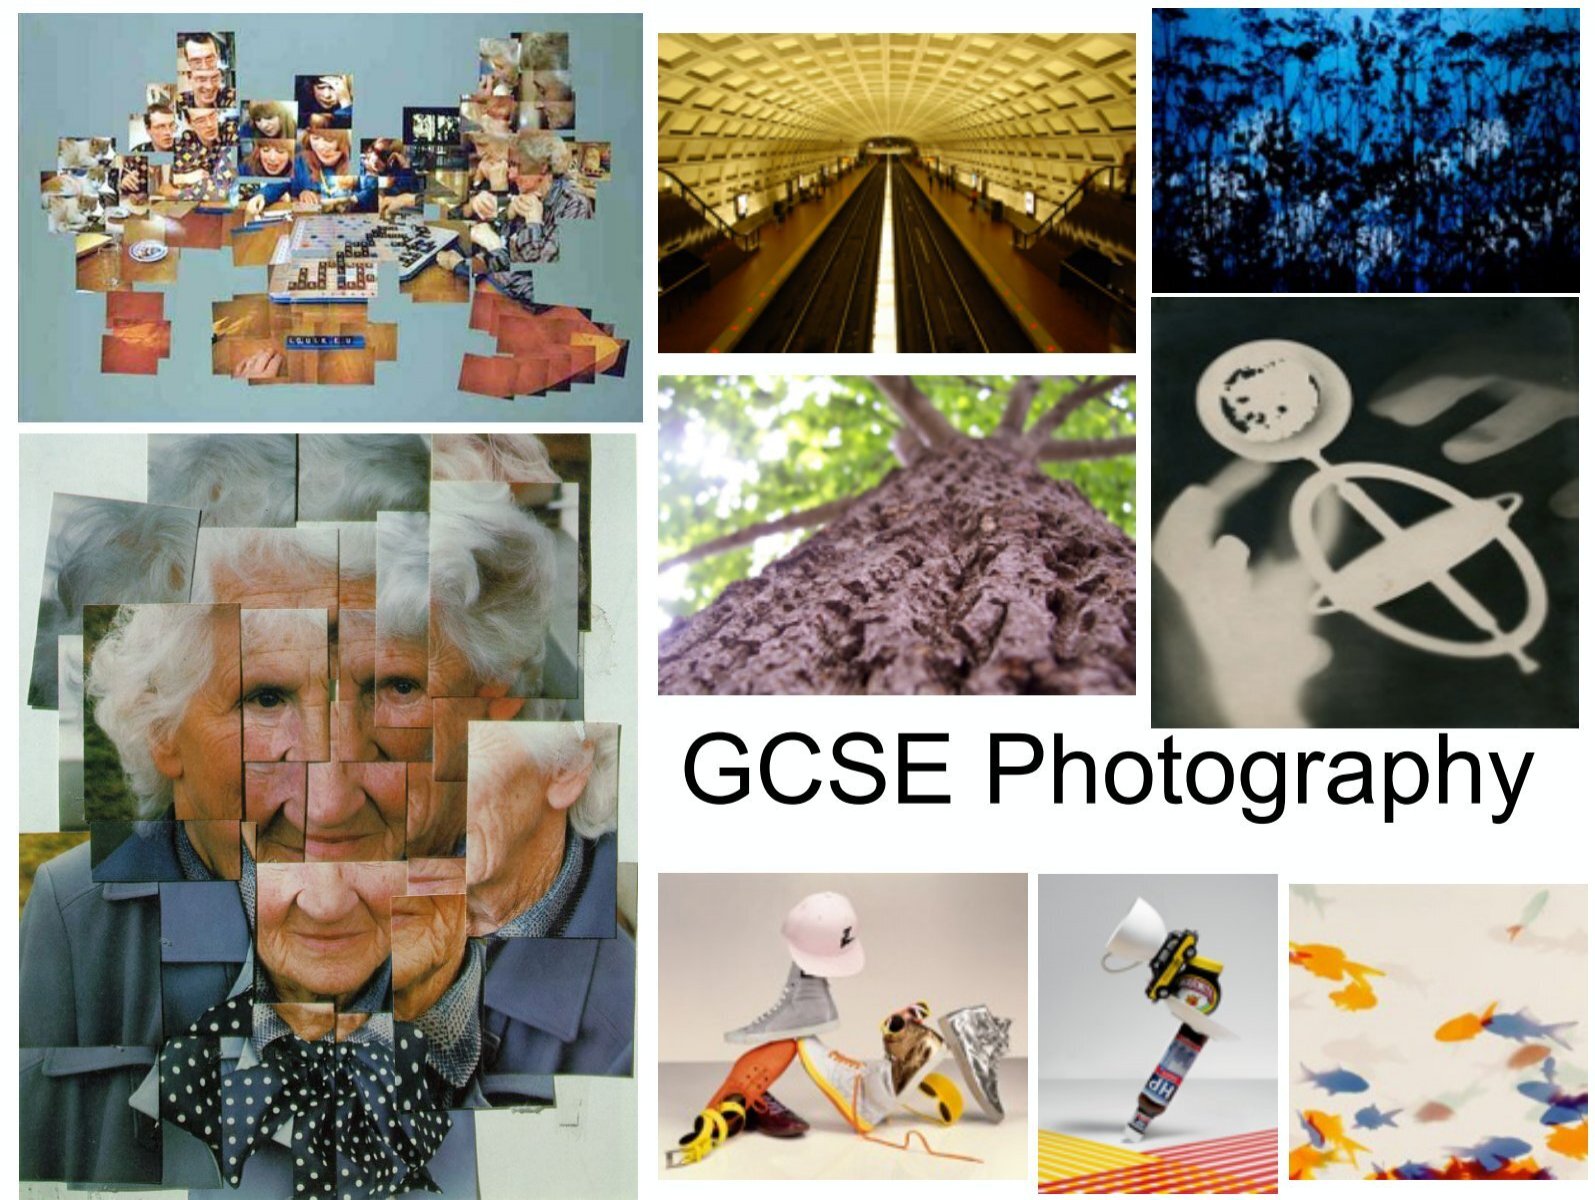 Analysing Photographs - GCSE Photography